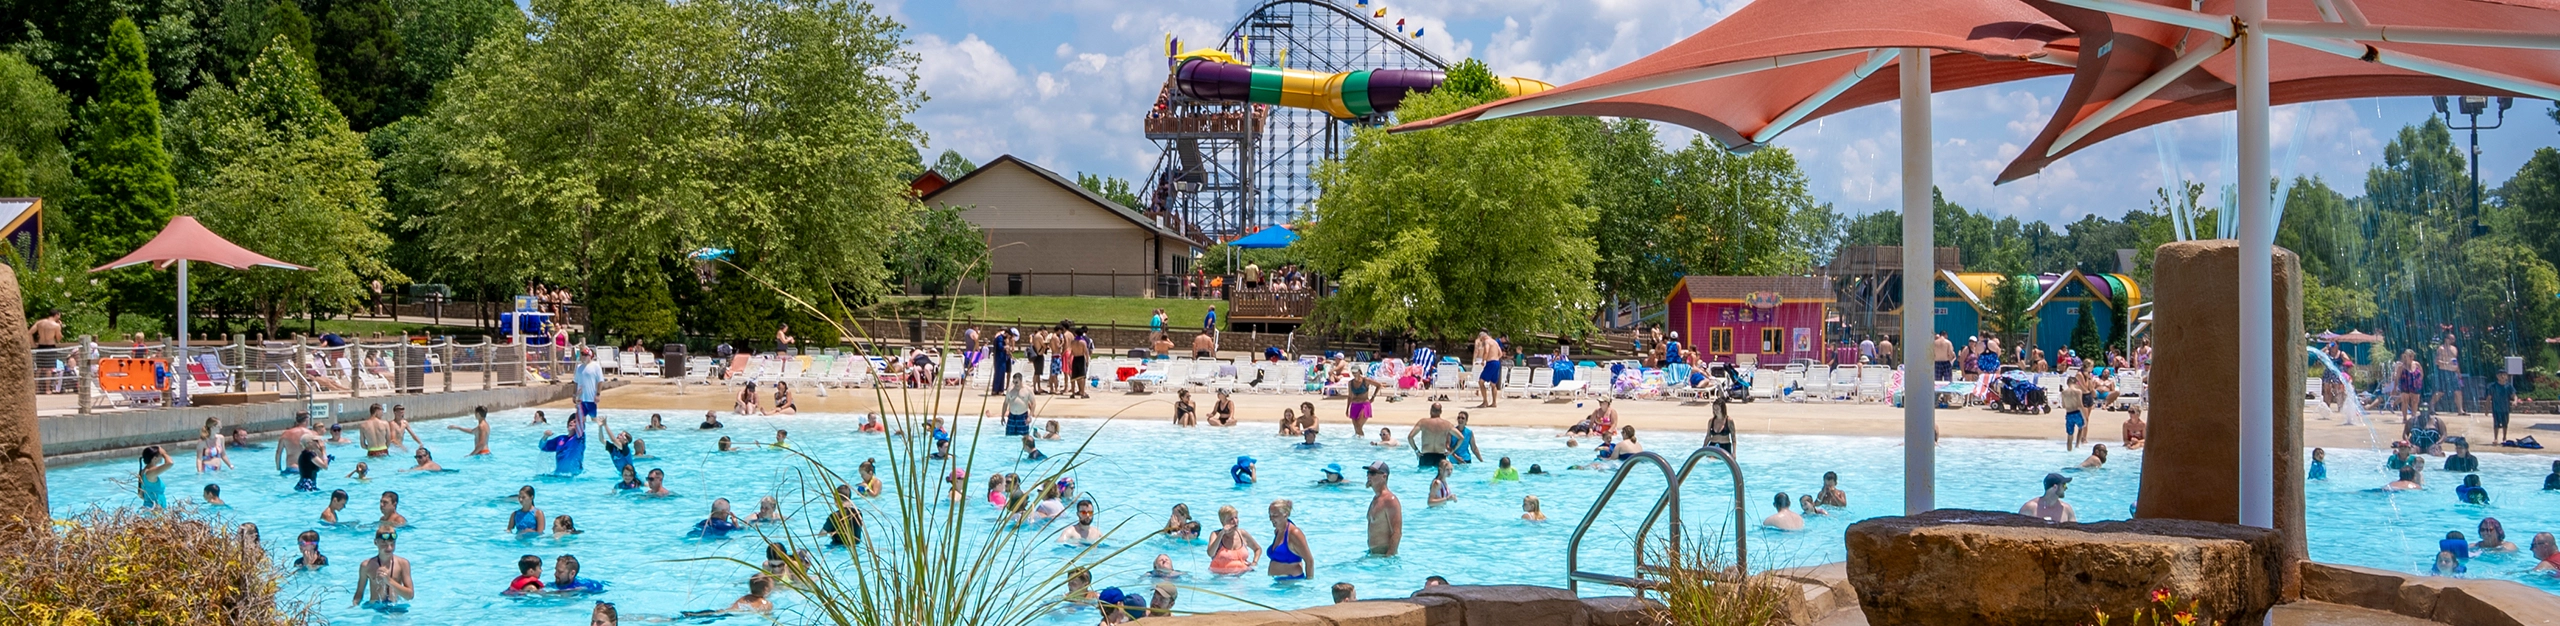 Bahari Wave Pool at Holiday World & Splashin' Safari in Santa Claus, Indiana.